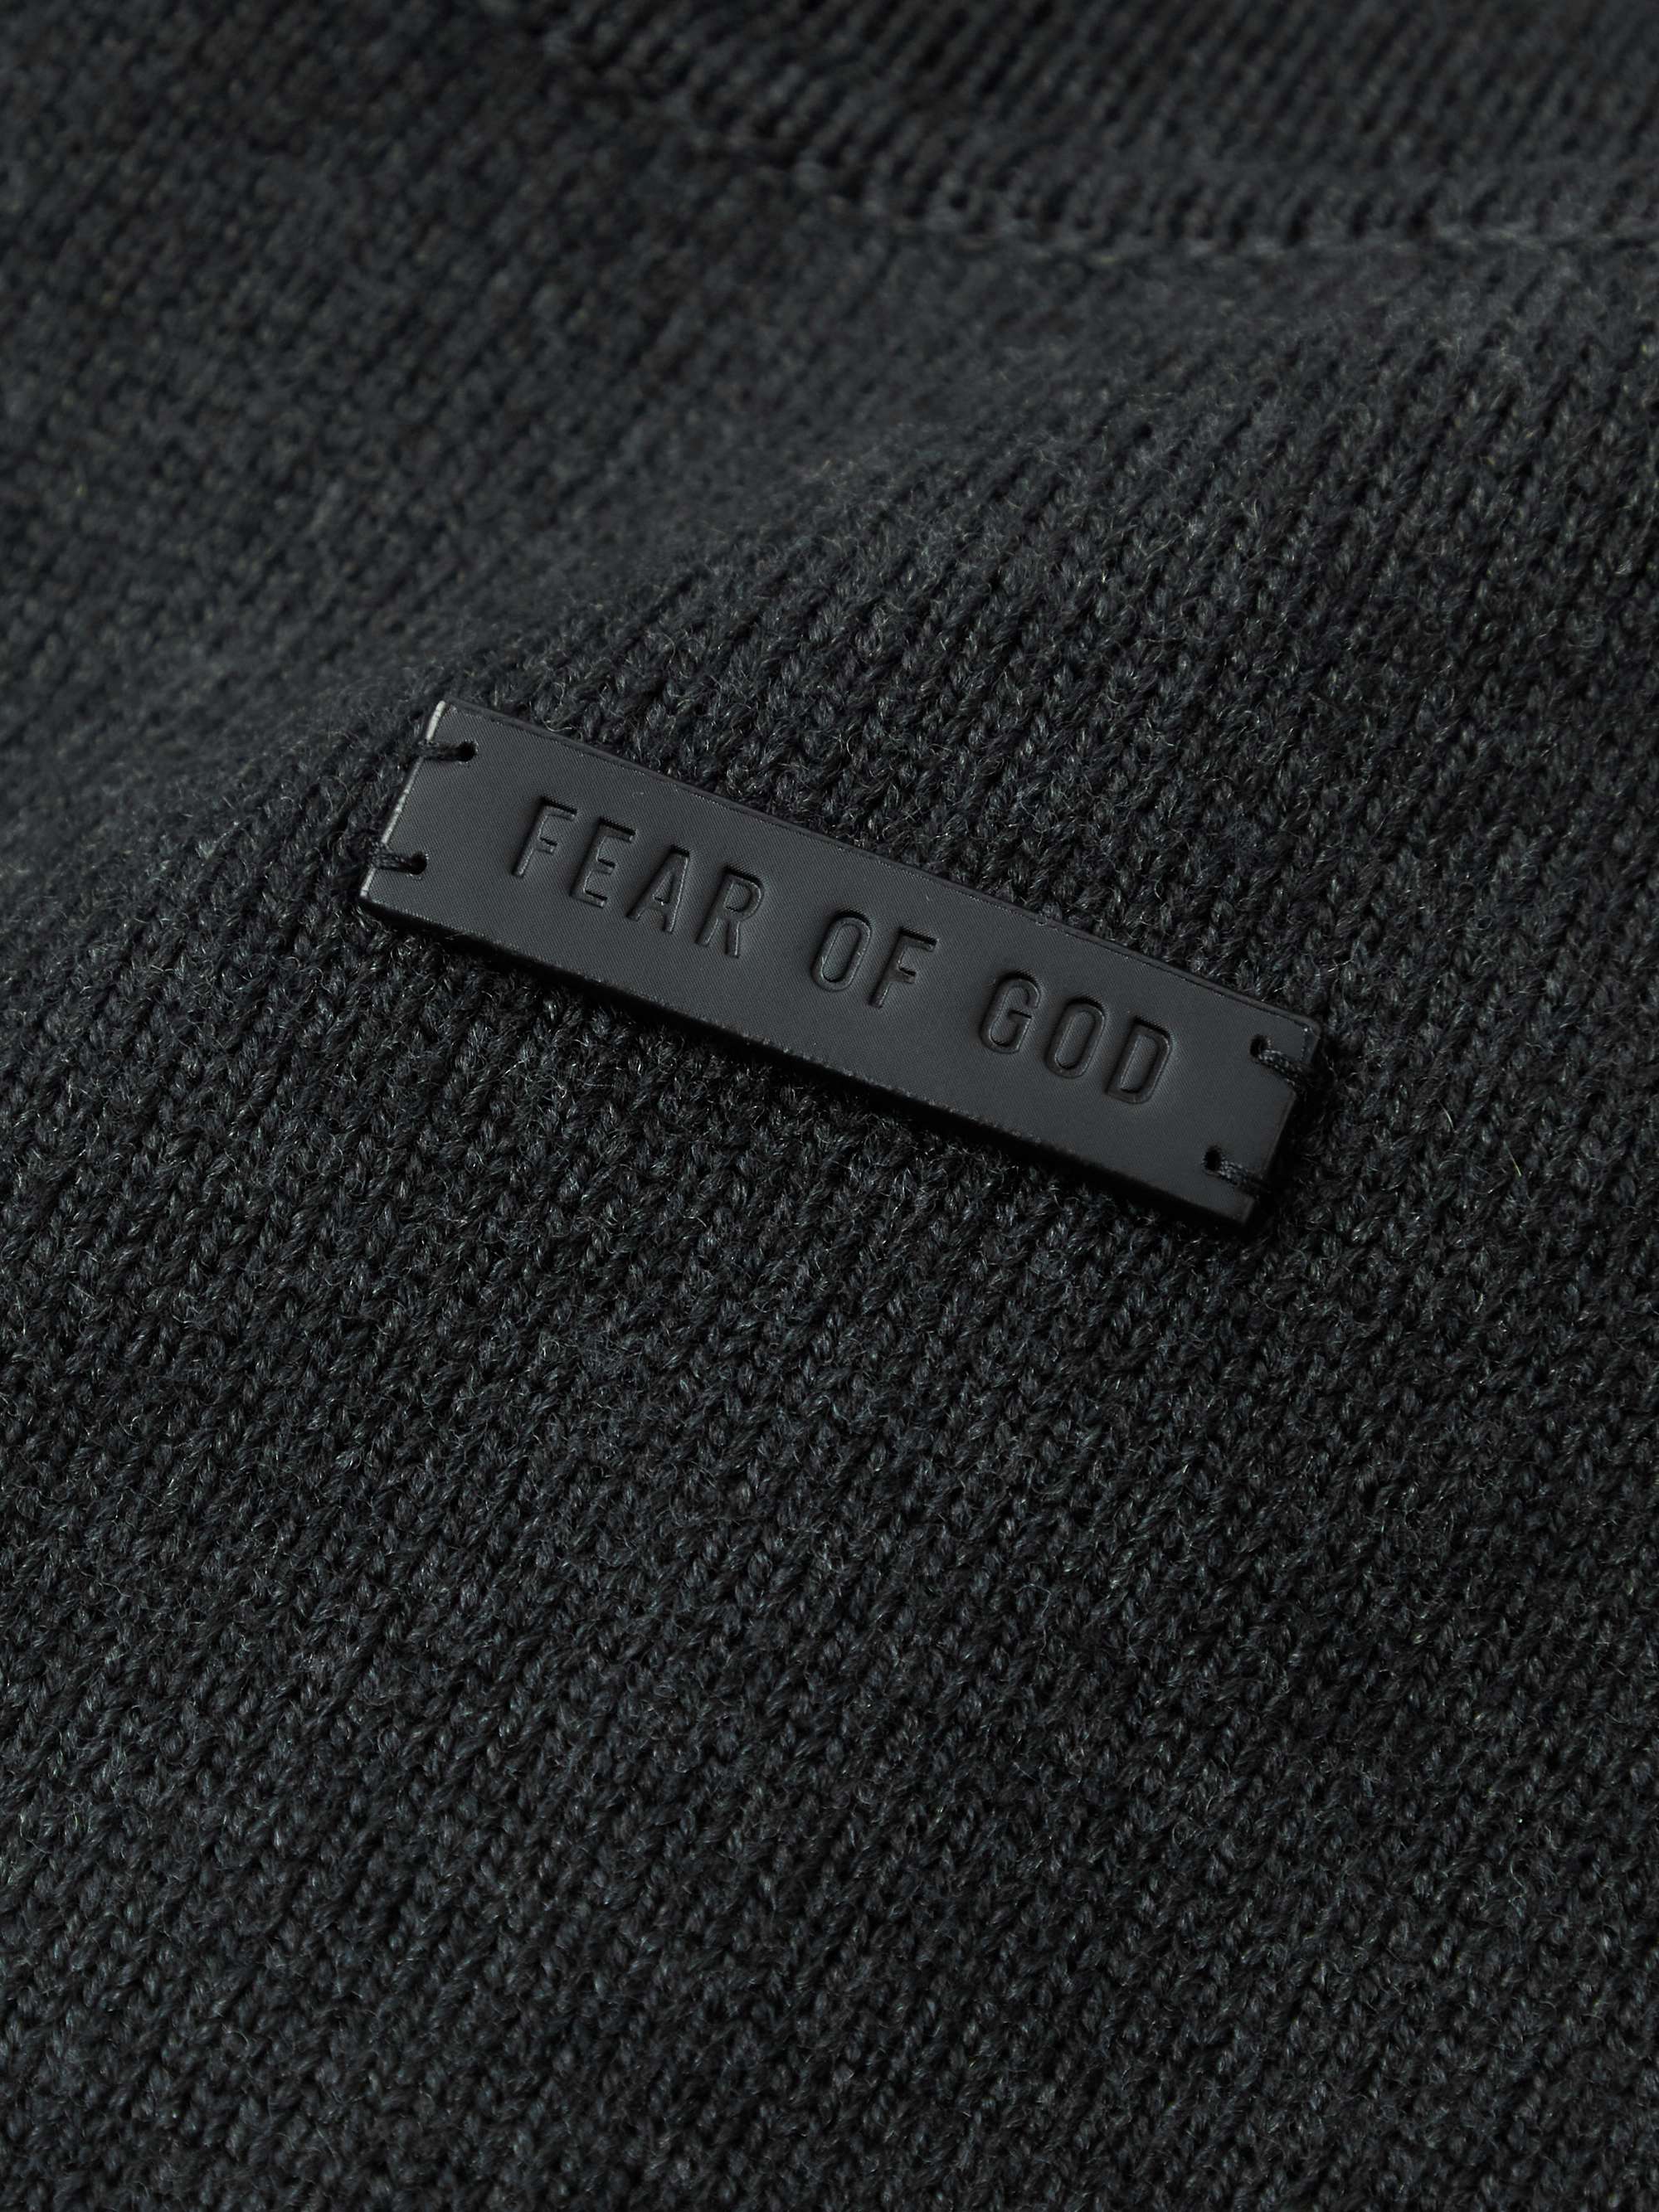 FEAR OF GOD Wool Polo Shirt